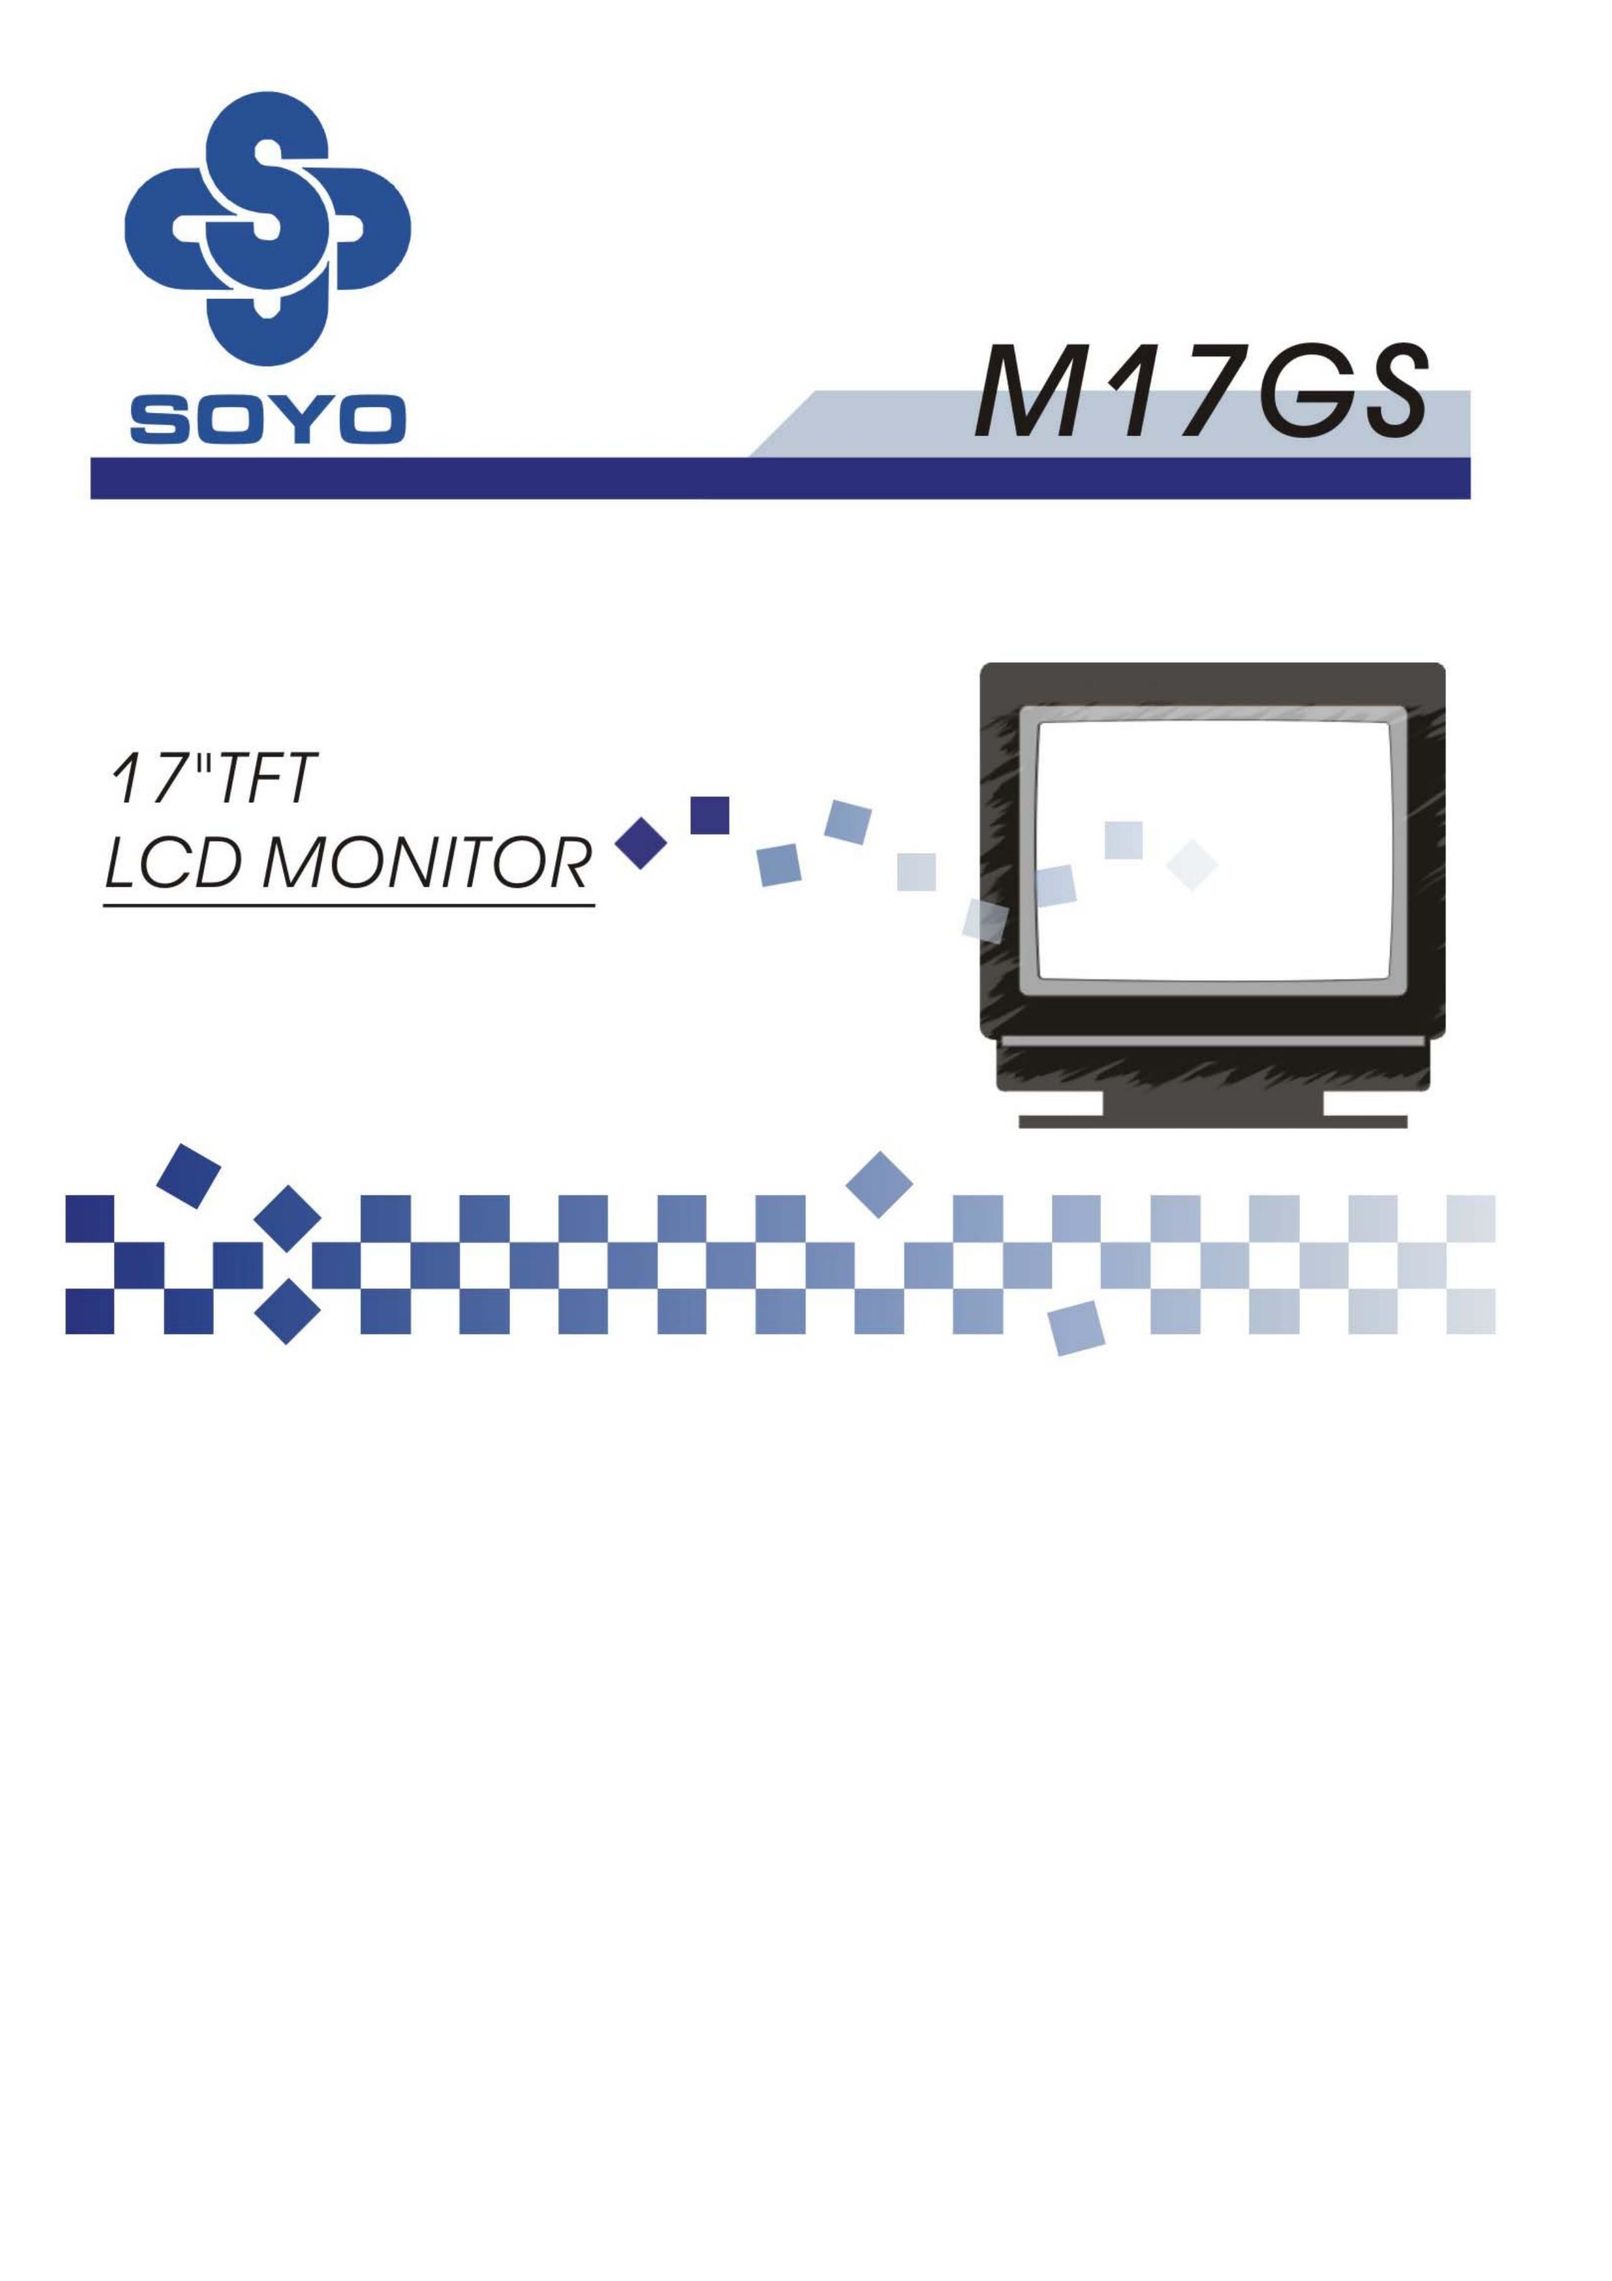 SOYO M17GS Car Video System User Manual